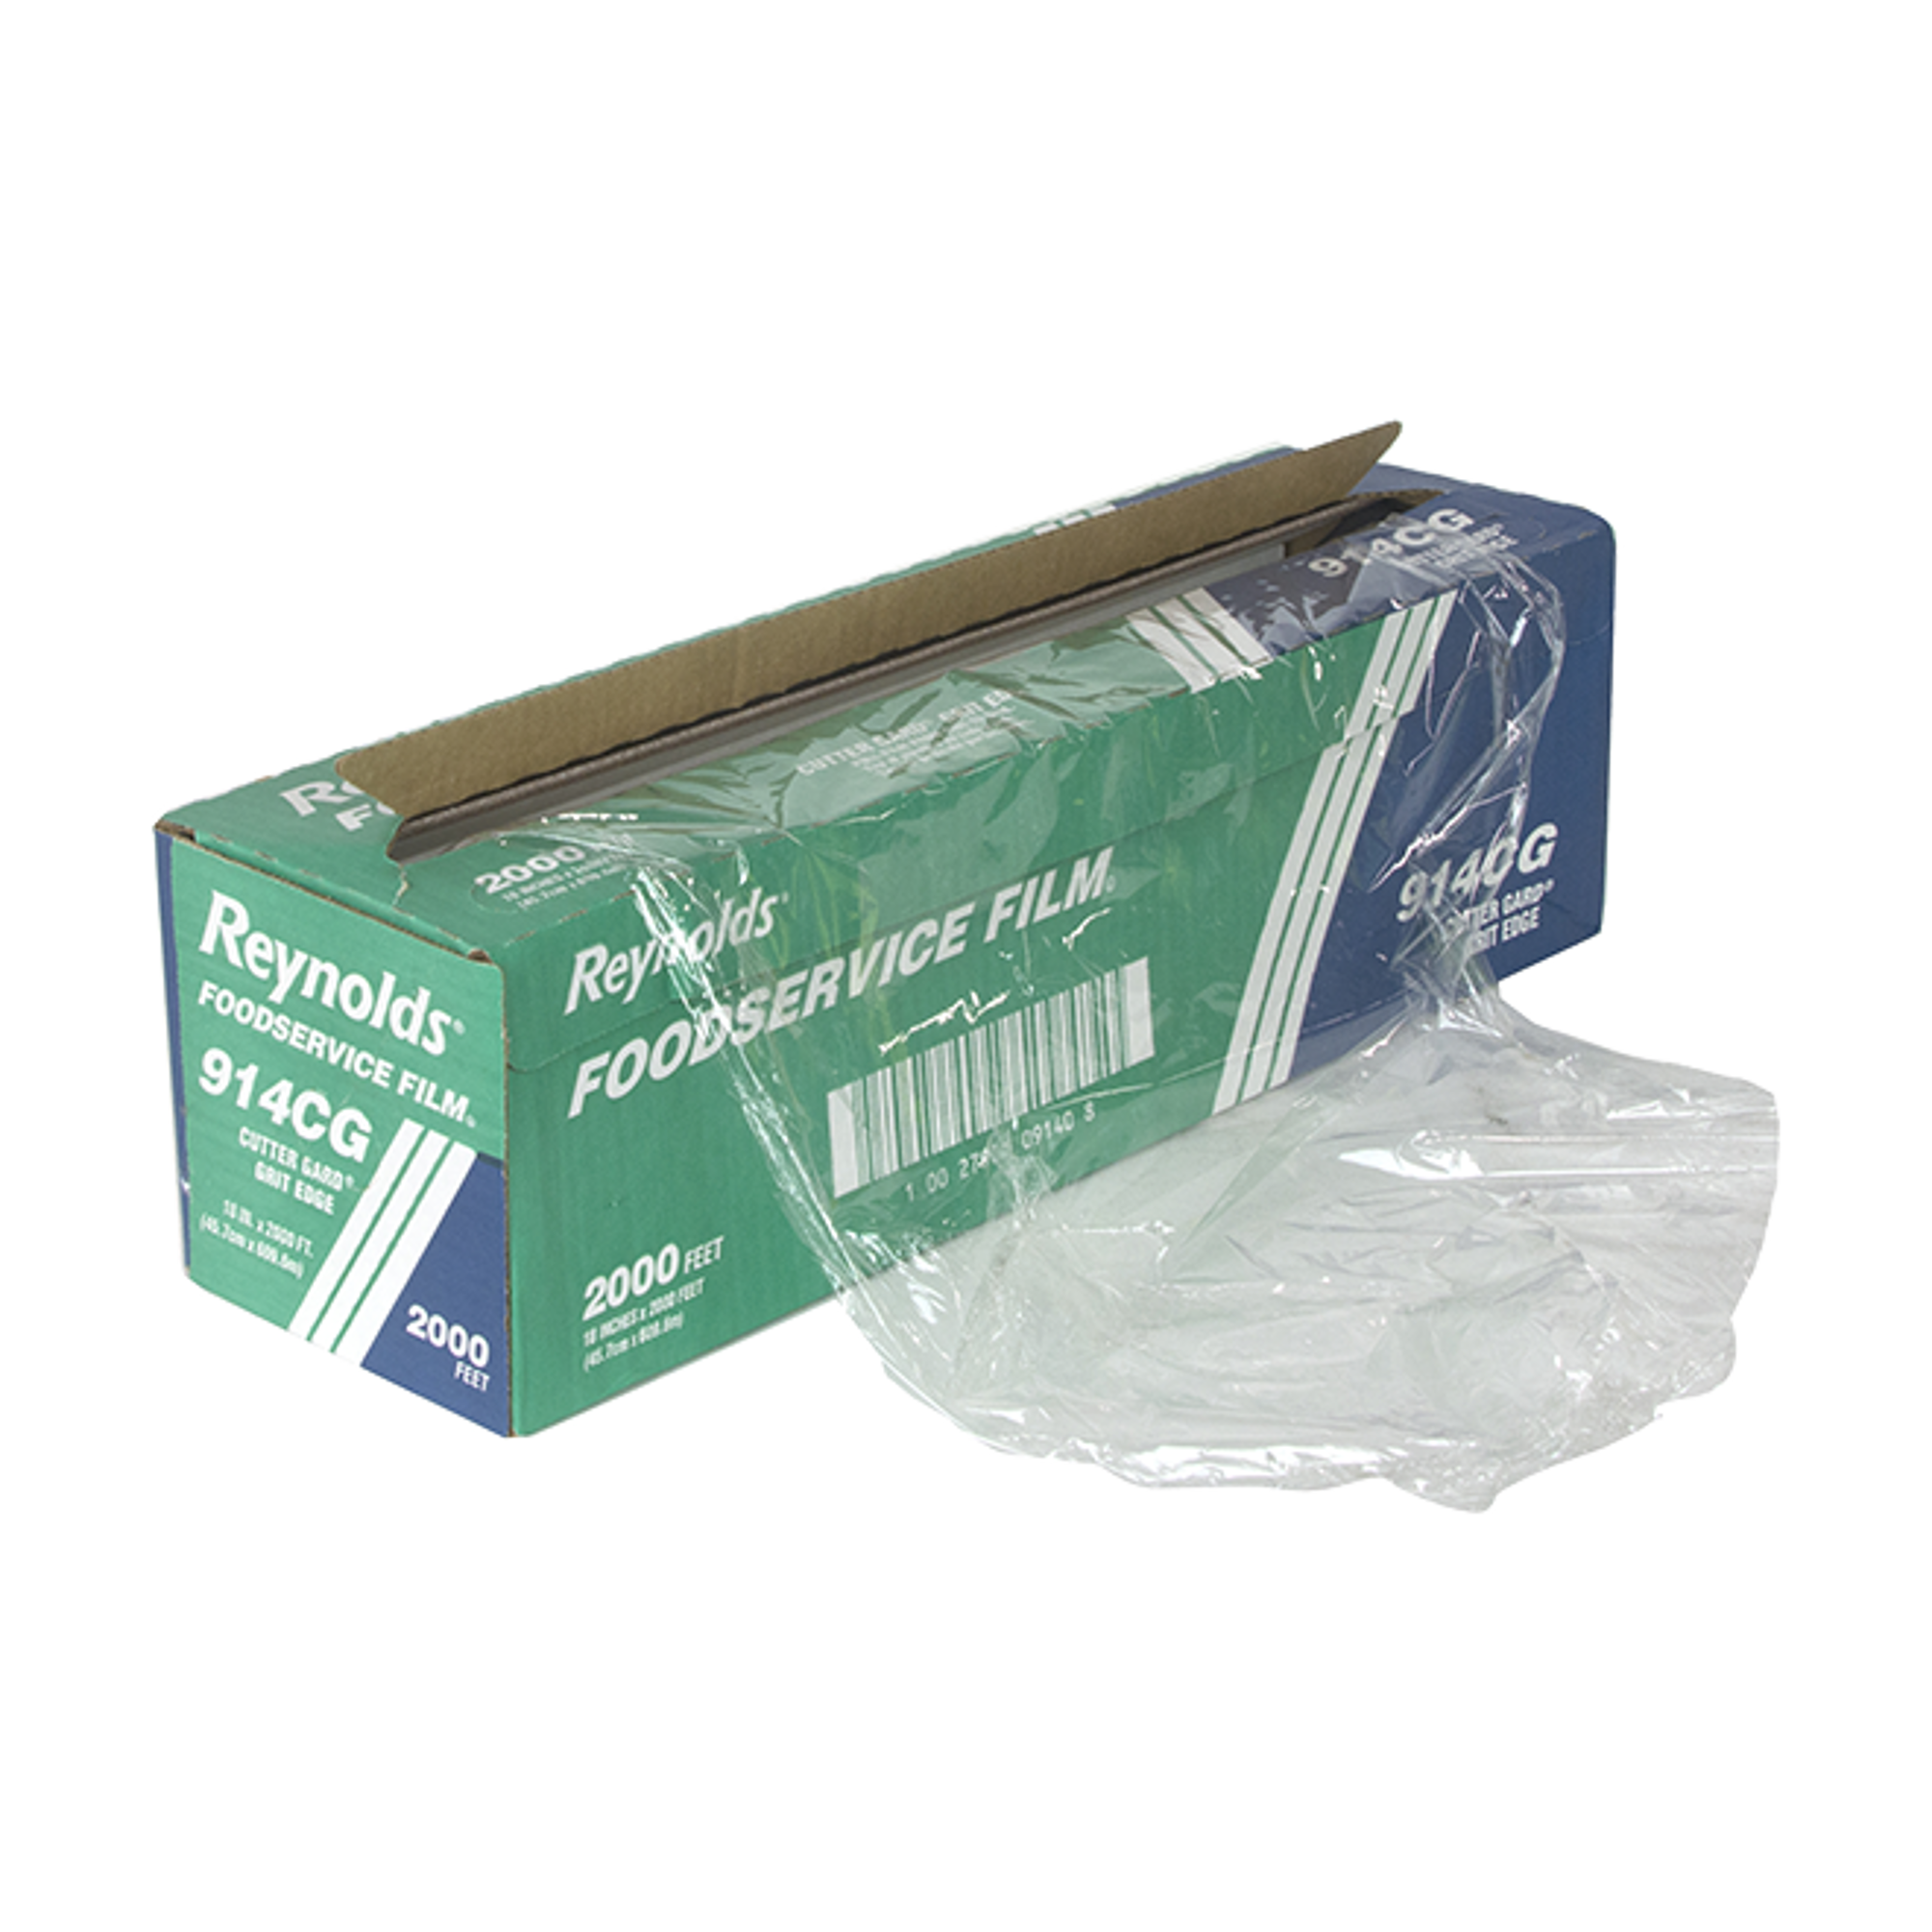 Reynolds PVC Food Wrap Film Roll in Easy Glide Cutter Box, 18 x 2,000 ft,  Clear (914SC)